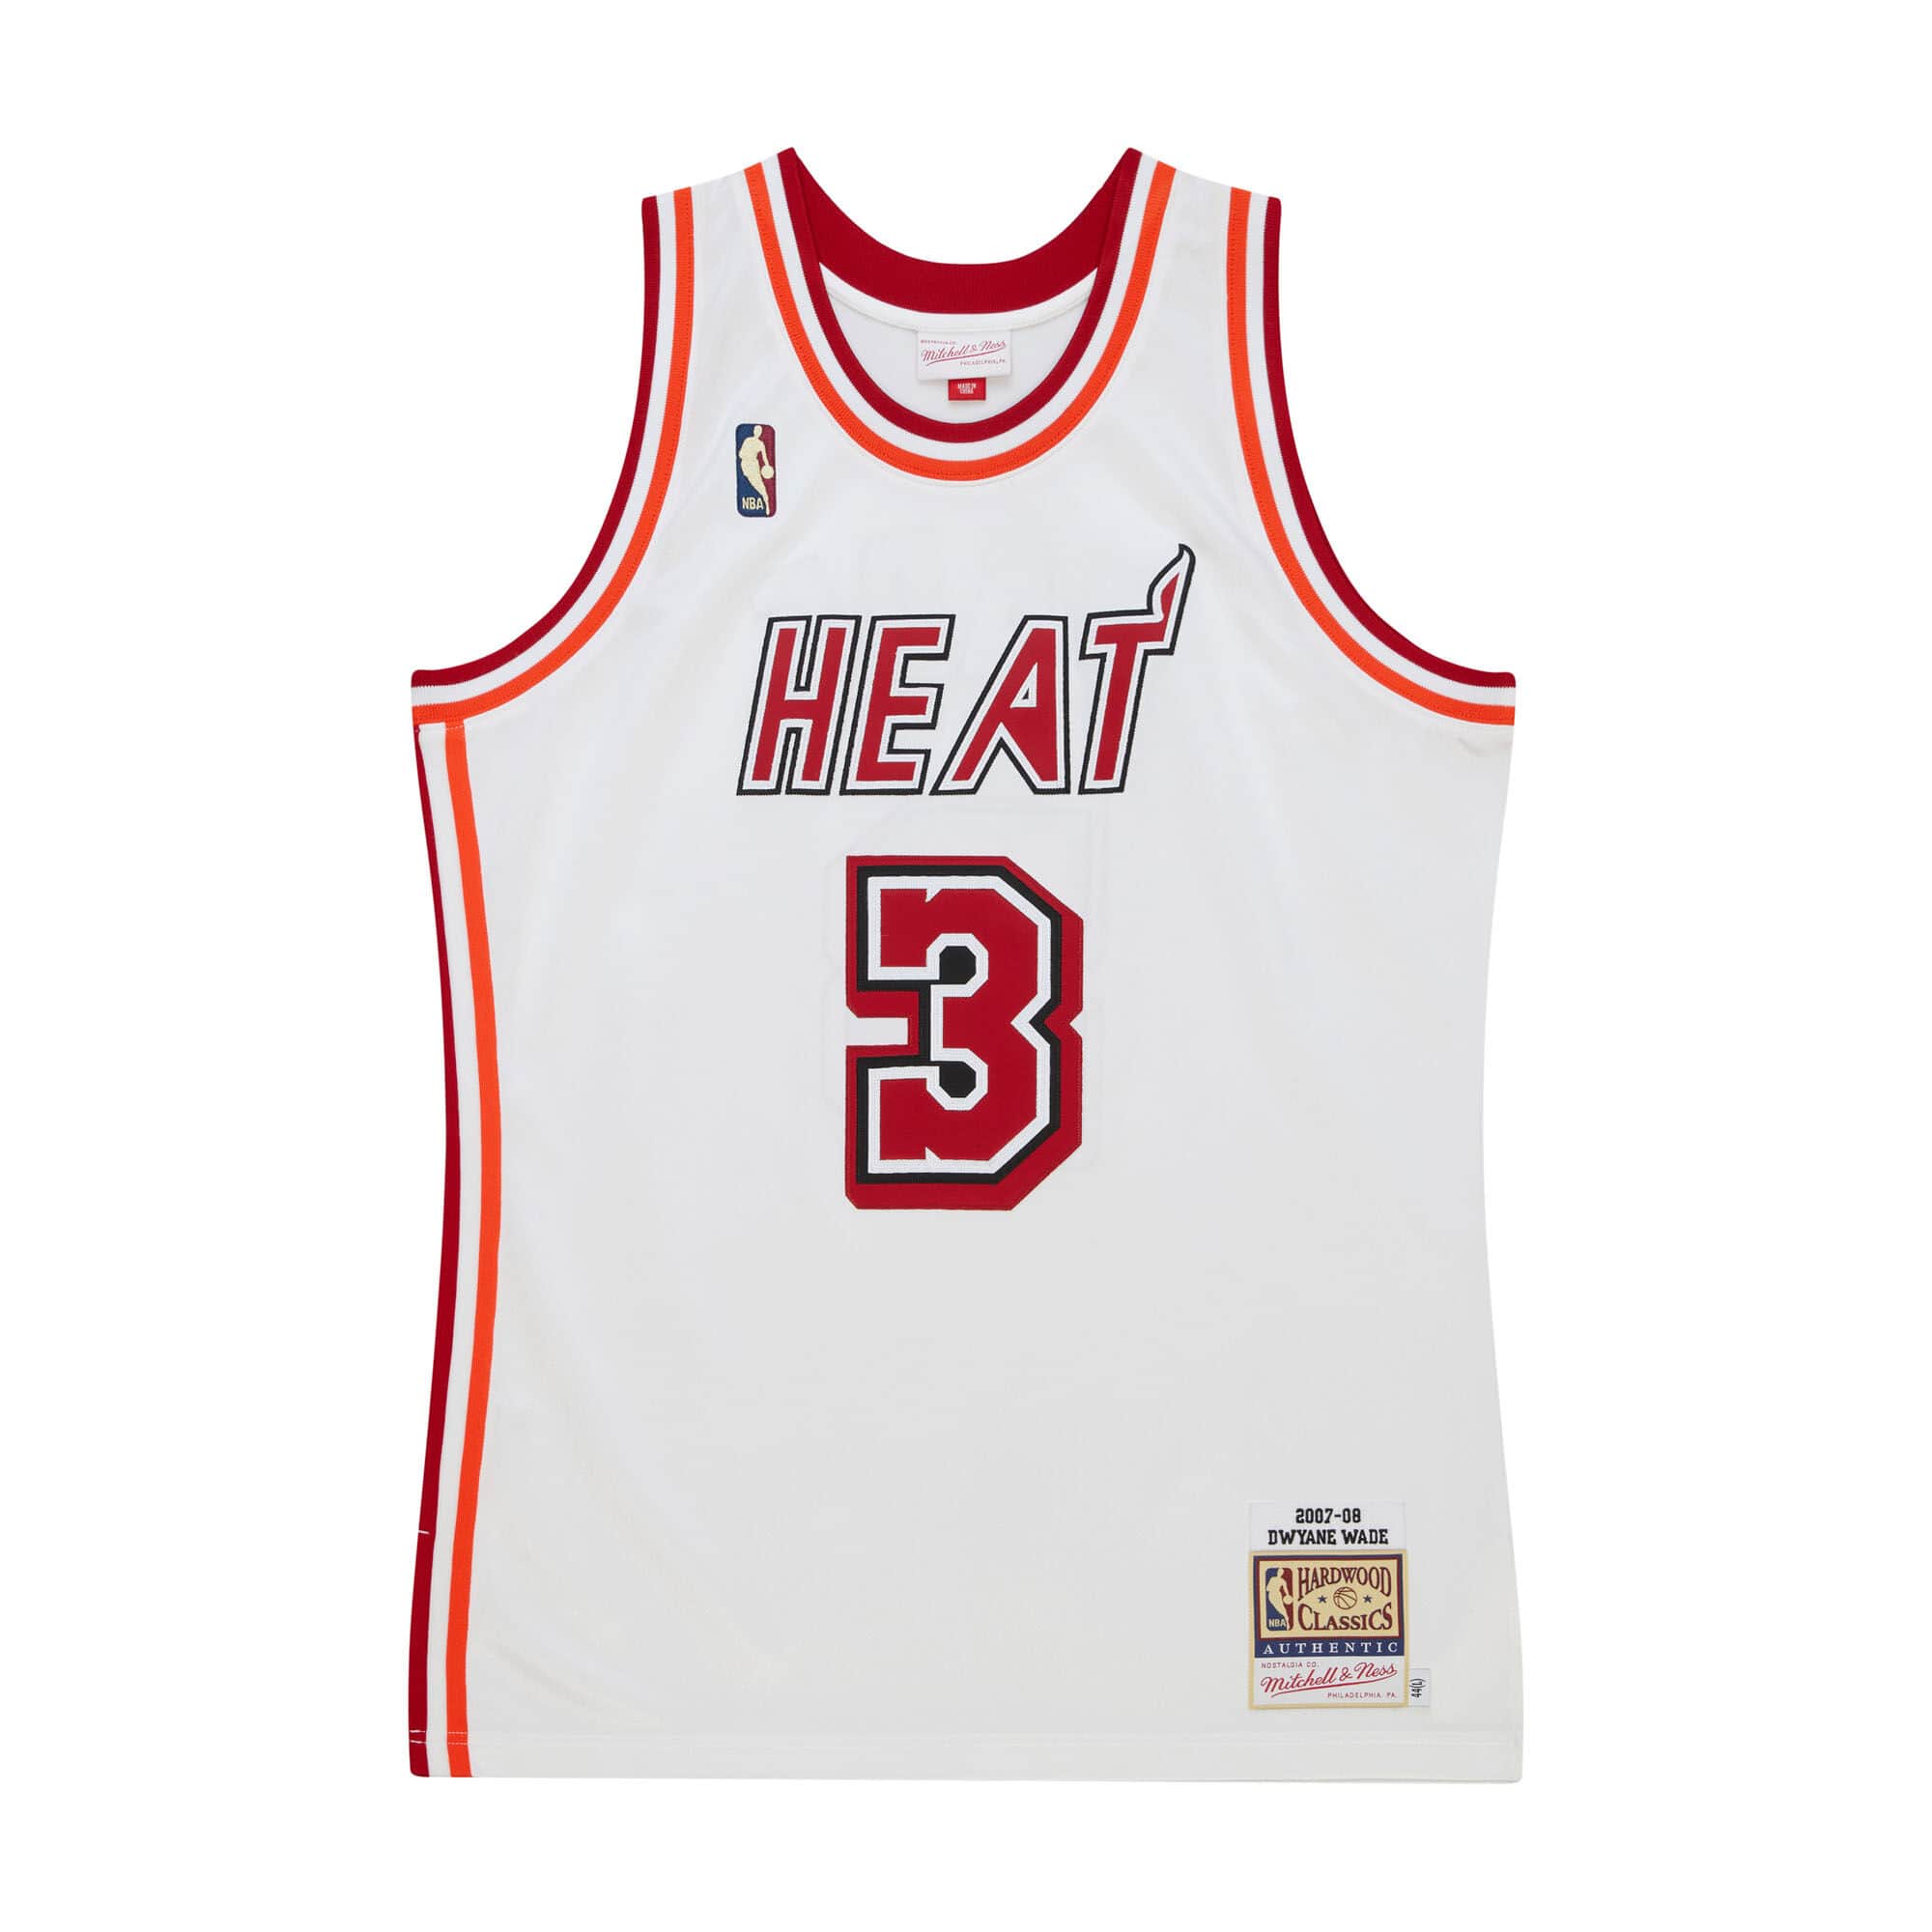 VTG Adidas Miami Heat Dwayne Wade Jersey L 14-16 Kids / Youth / Boys NBA